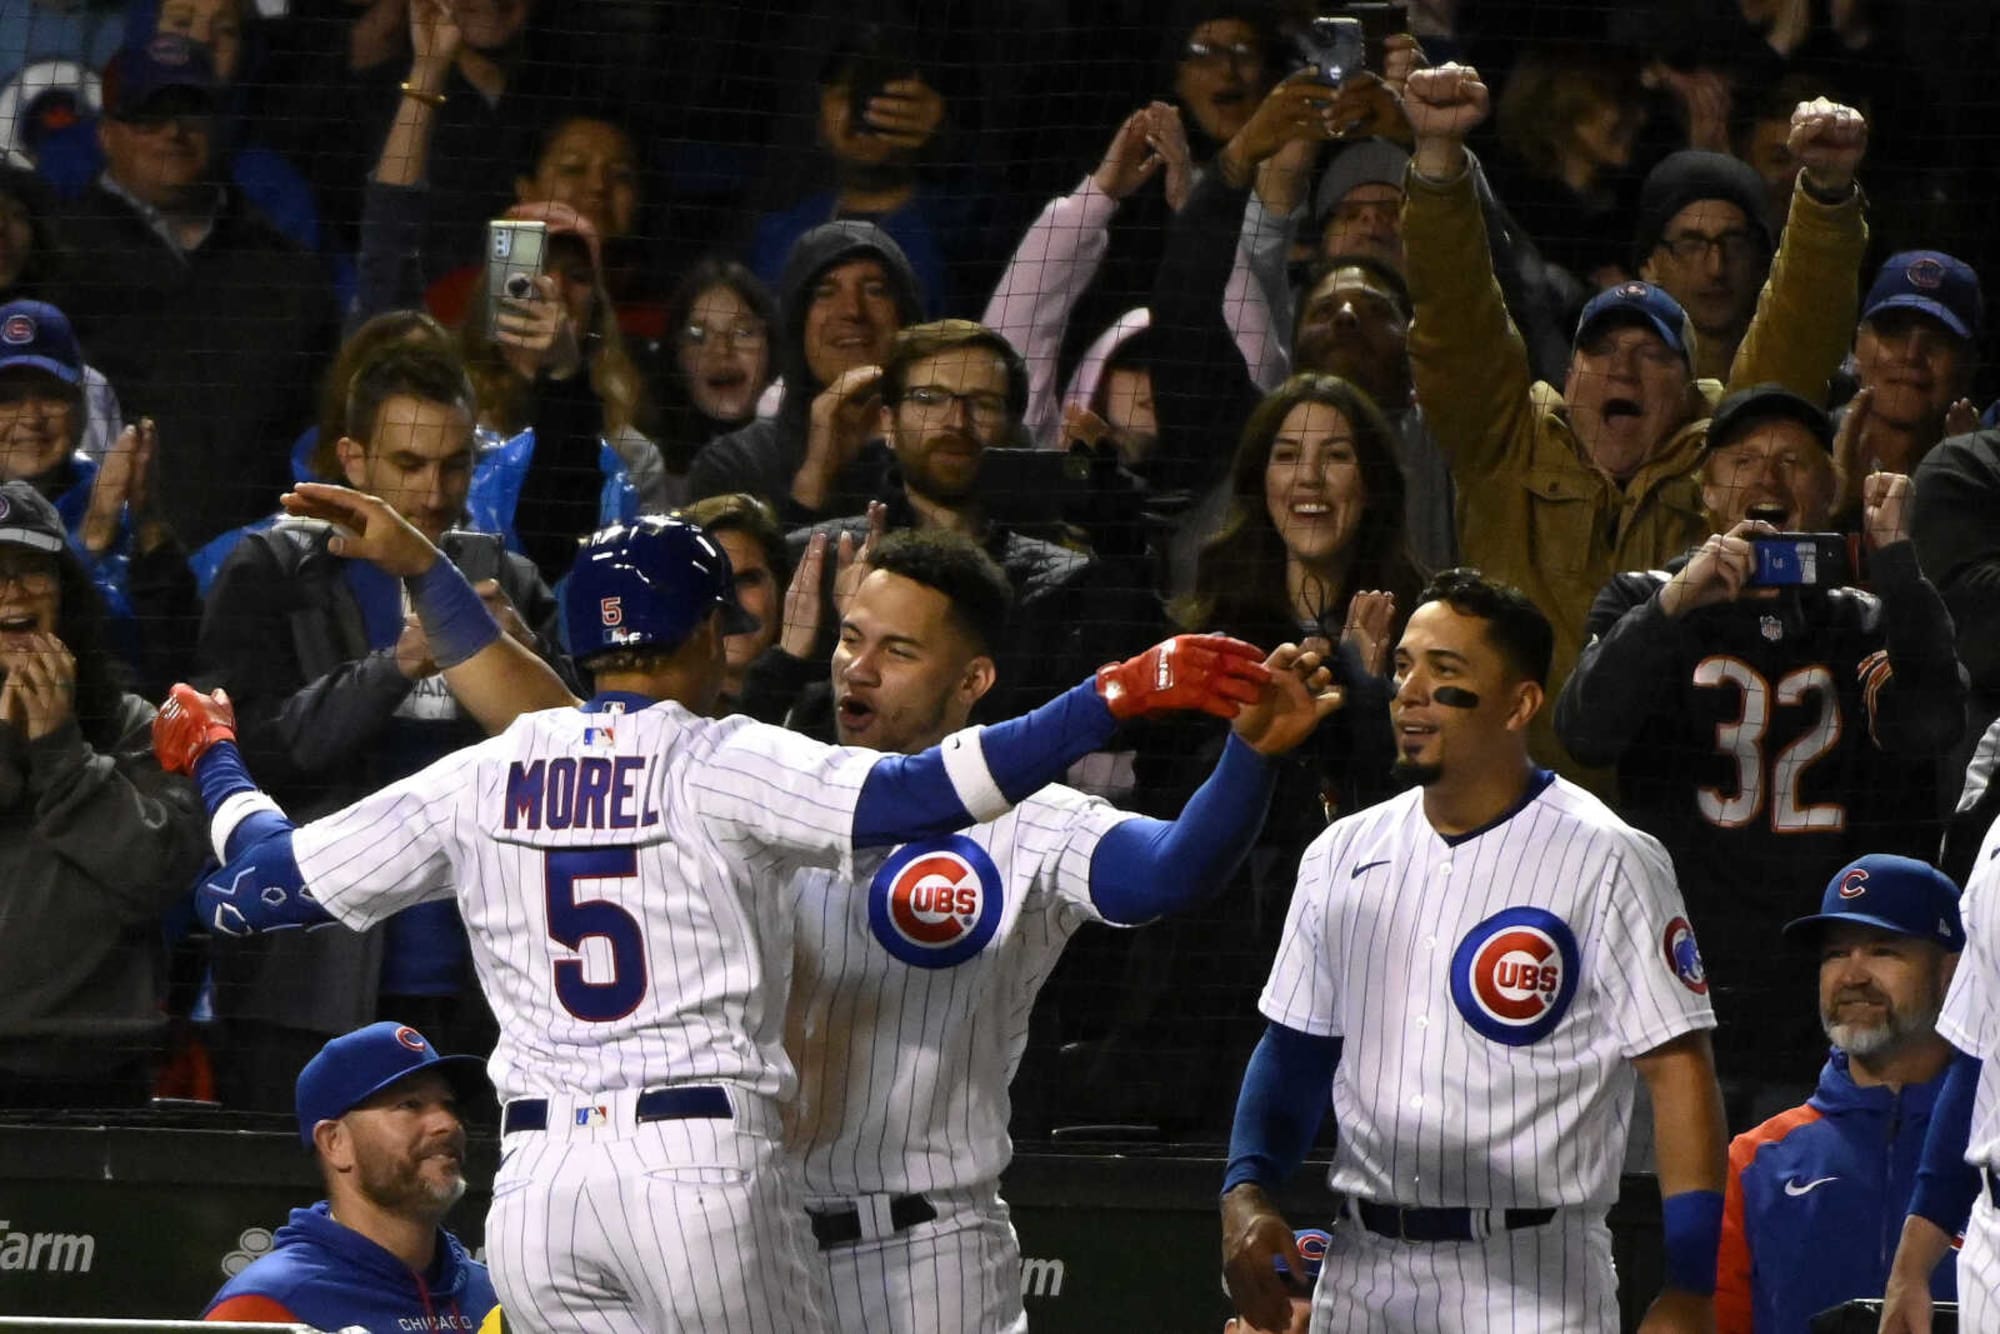 Cubs' Christopher Morel has epic walk-off celebration vs. White Sox